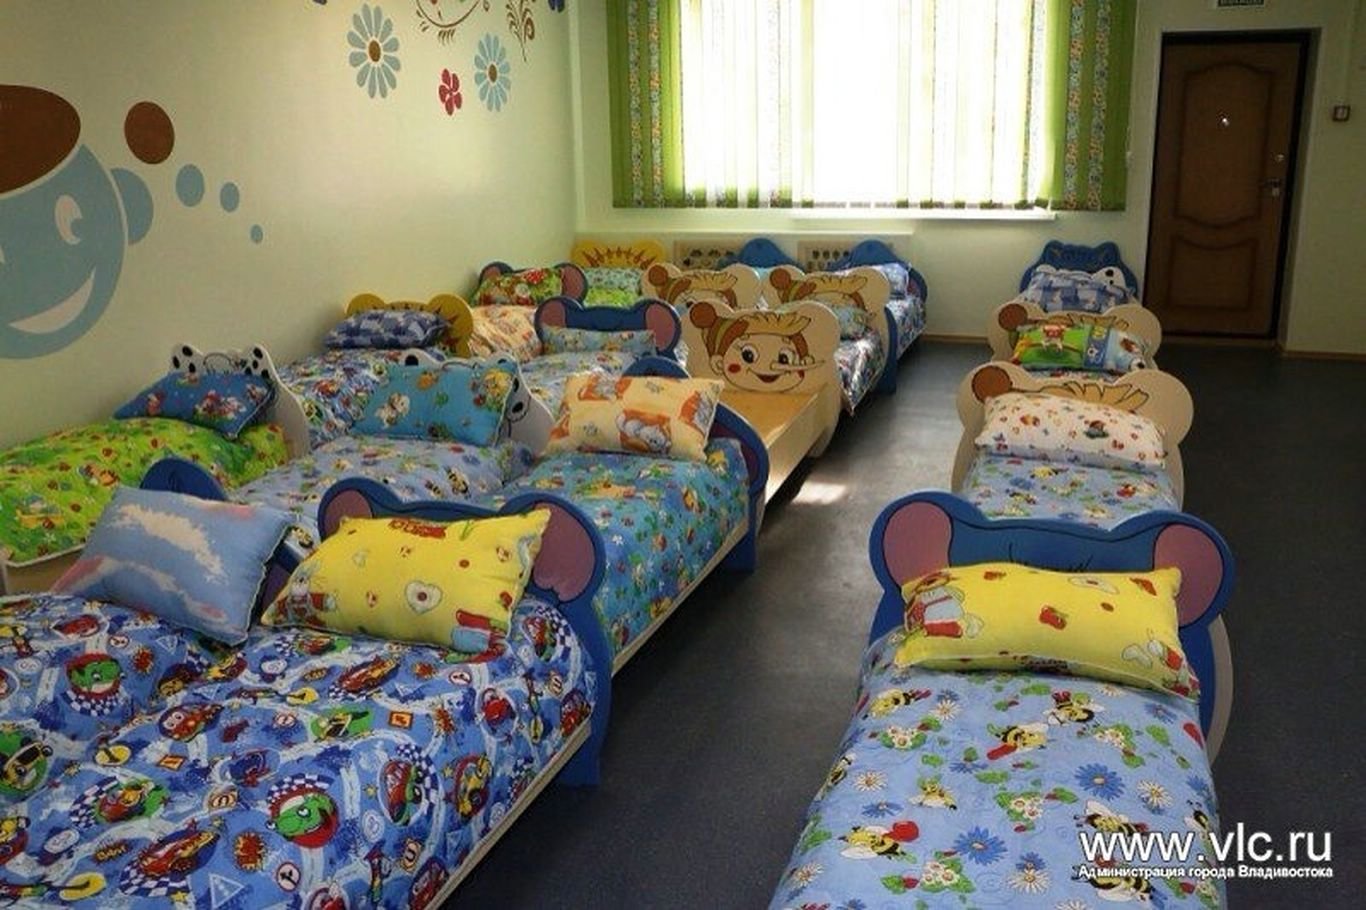 Кровати в детском саду